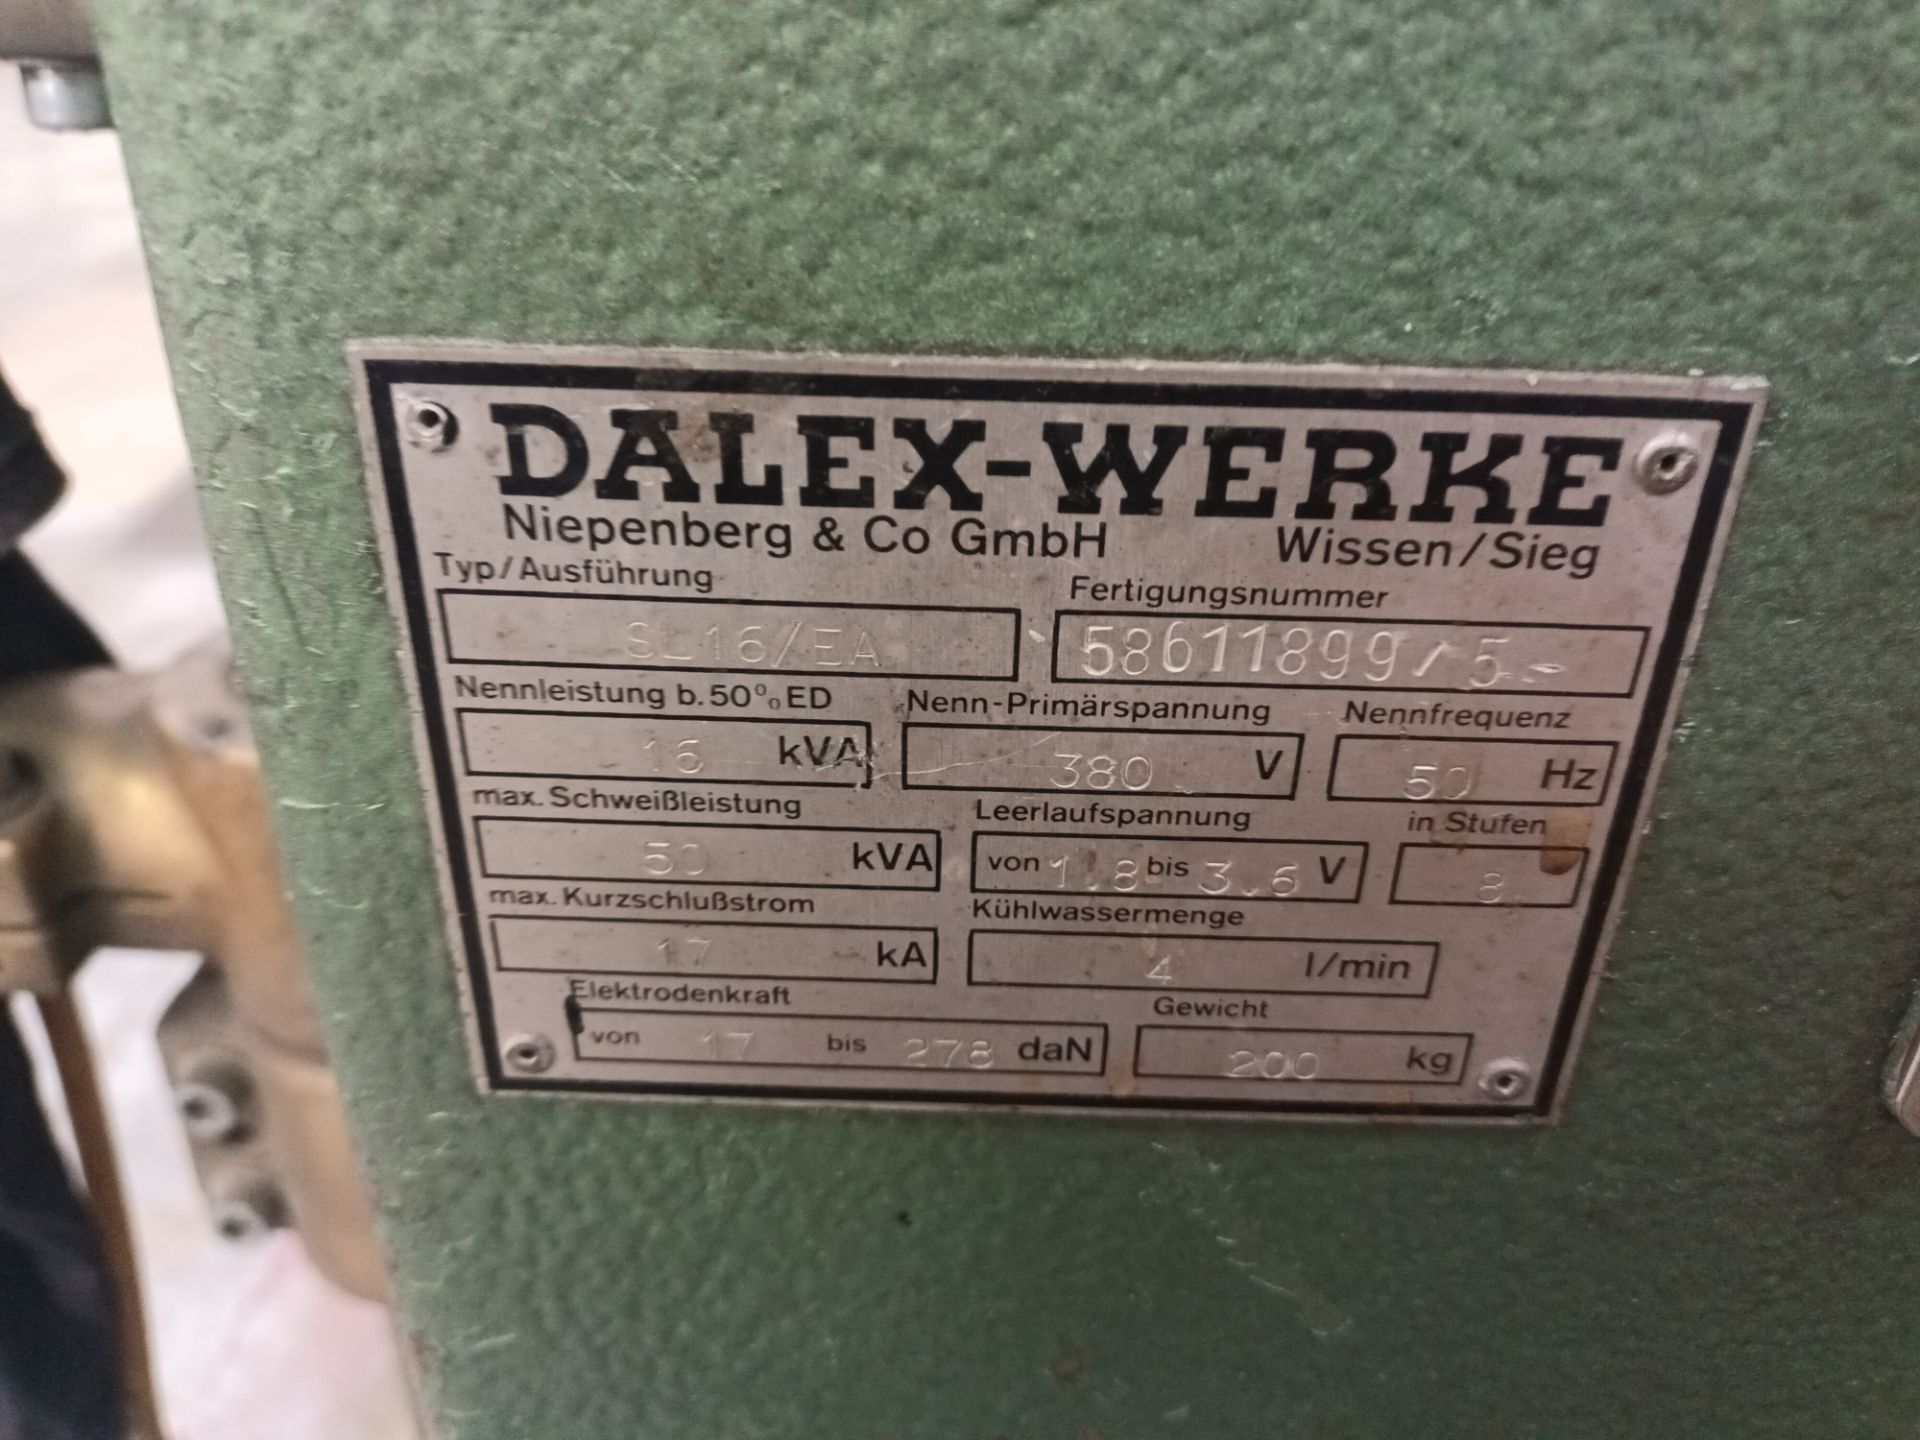 Dalex Werke SL16 spot welder - Image 2 of 3